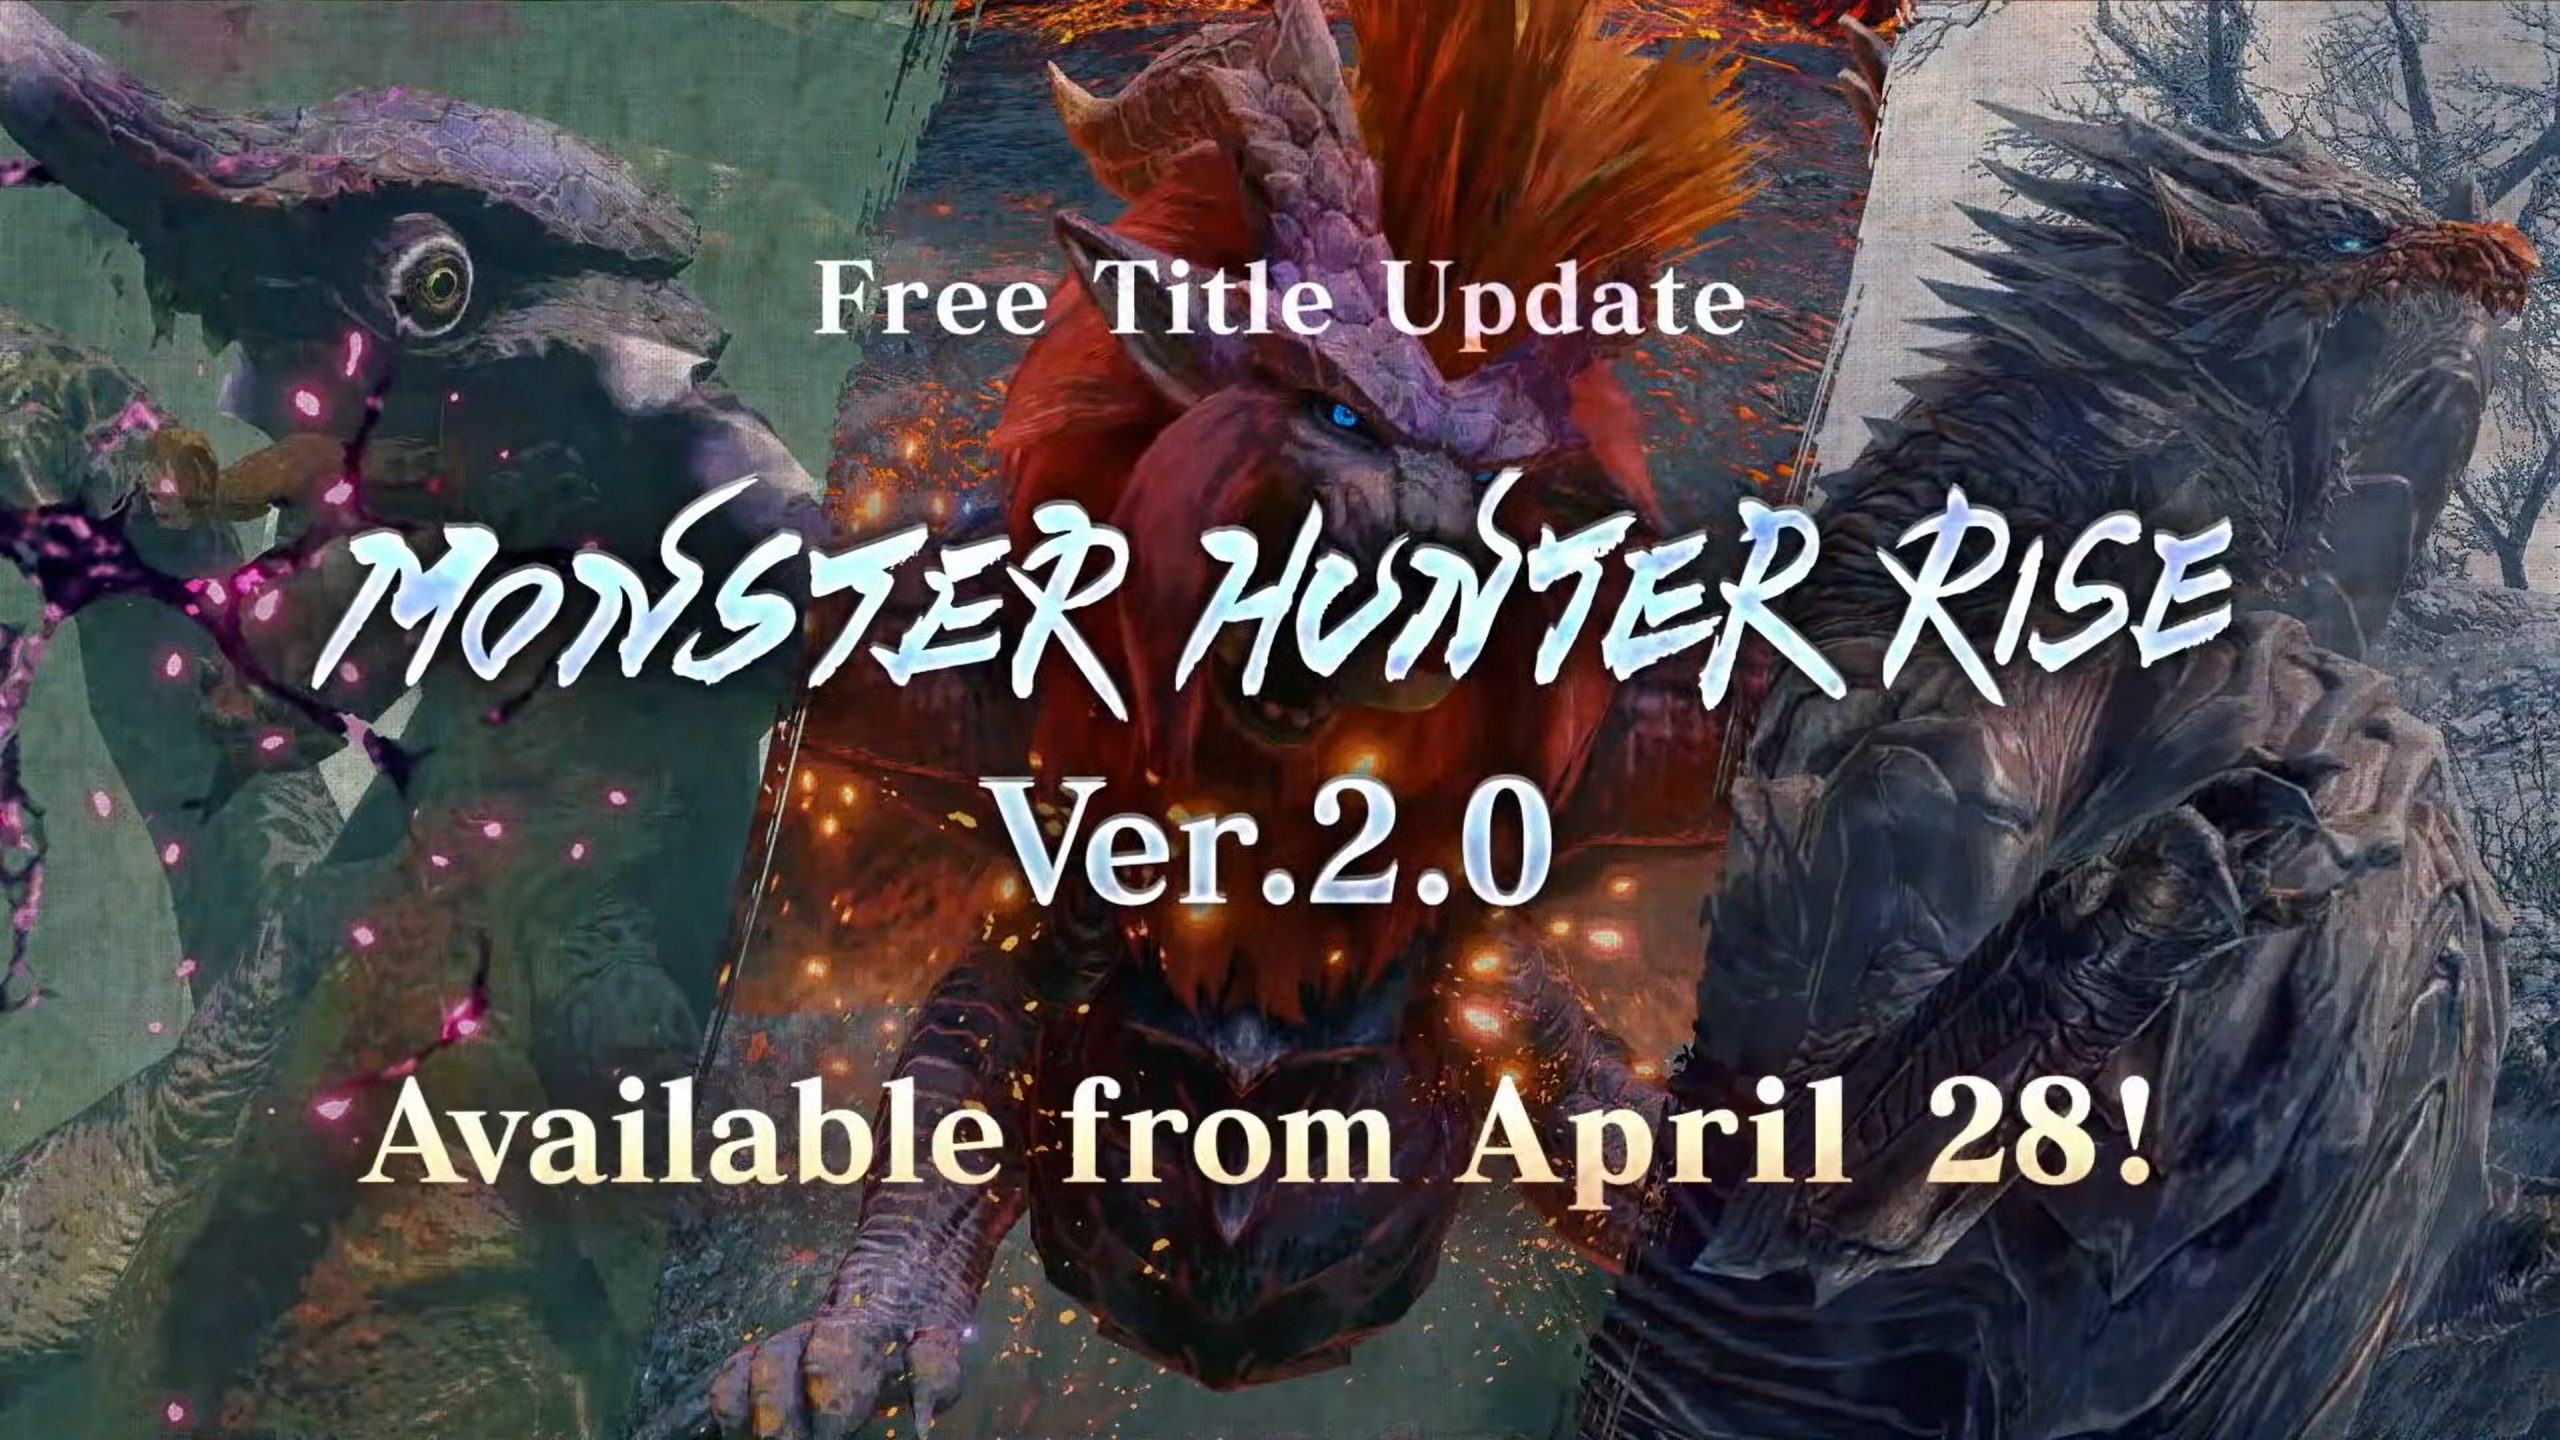 Monster Hunter Rise Extra Tracks II no Steam